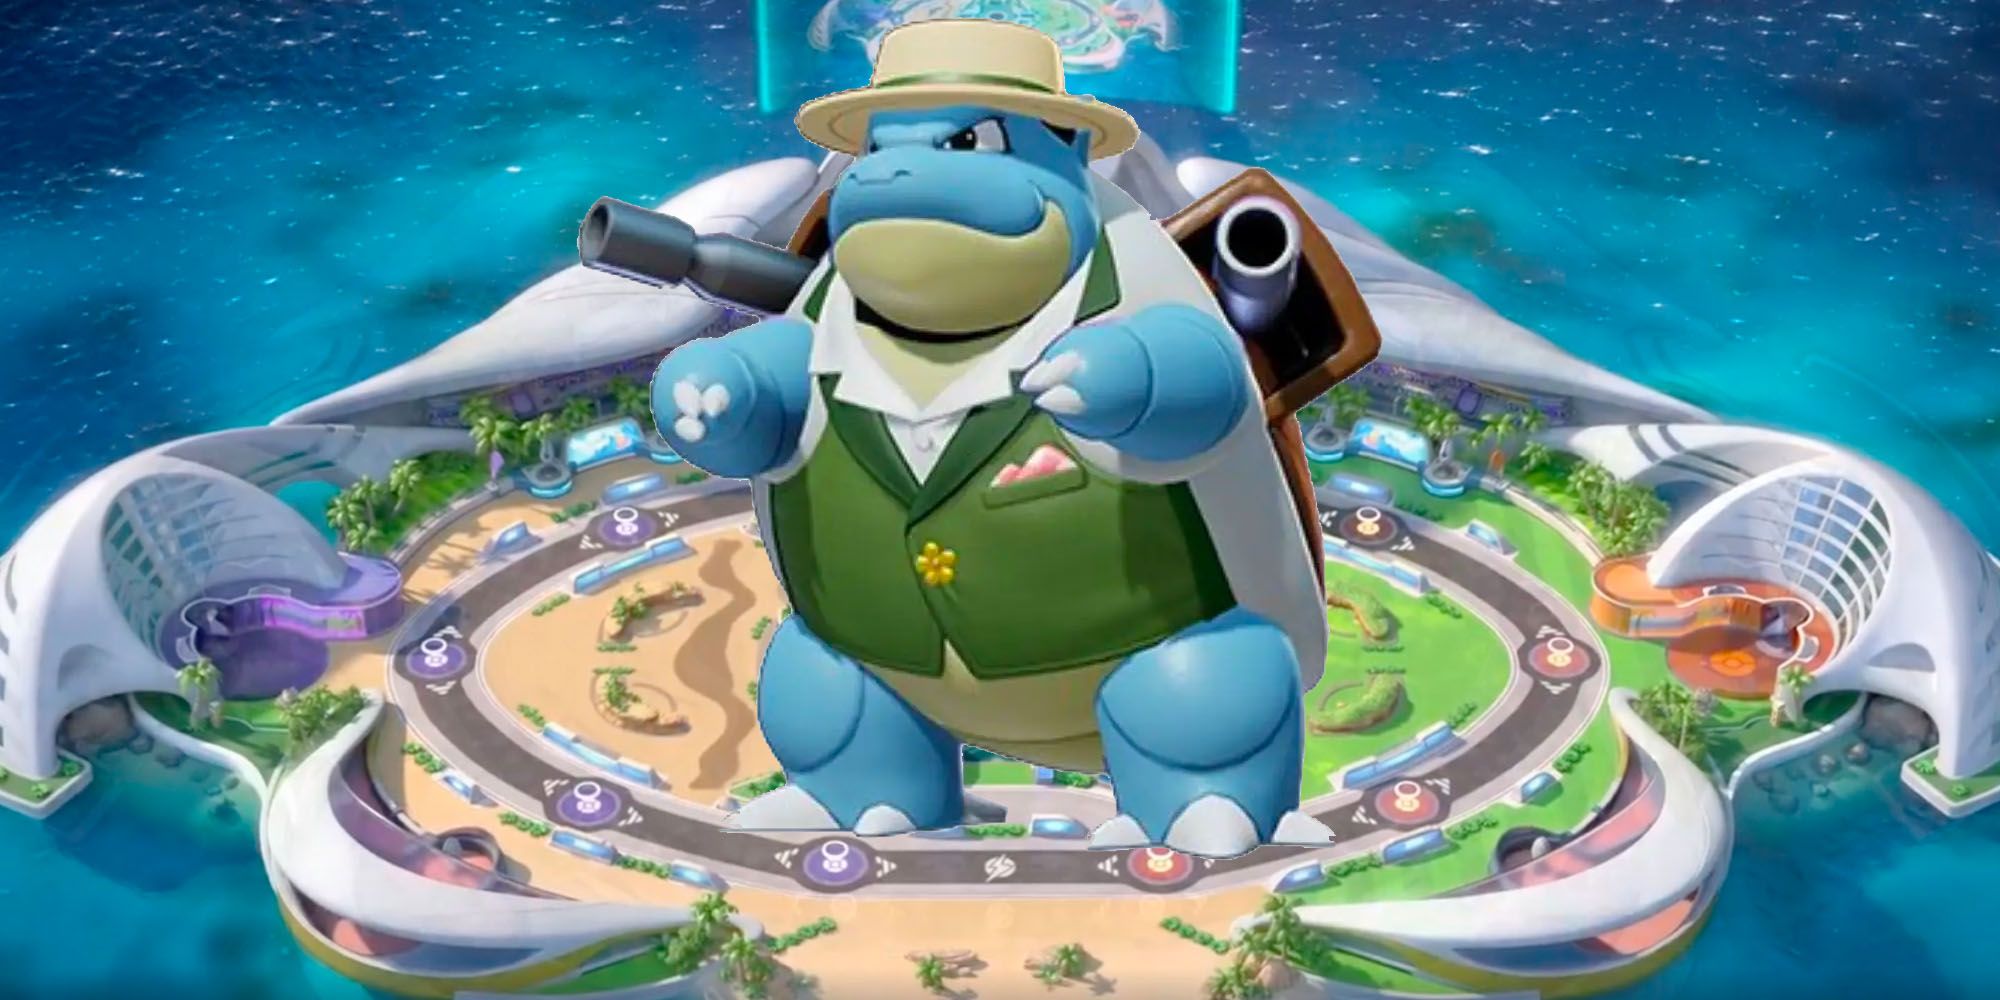 Blastoise wearing a suit and fedora against a Pokémon Unite background